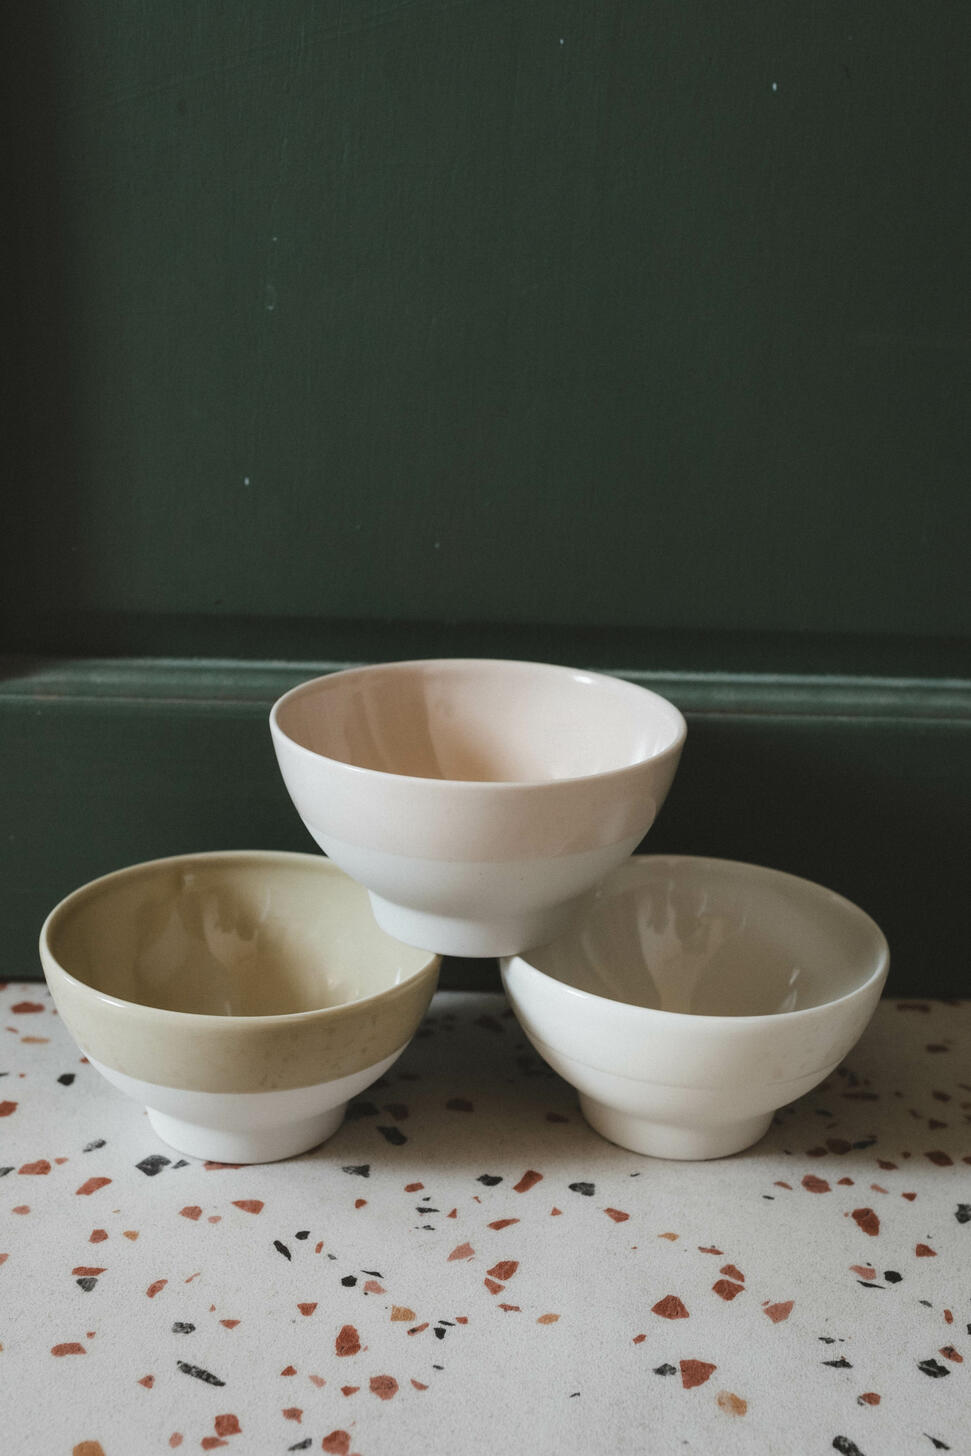 bowl cantine rose buvard ceramic manufacturer